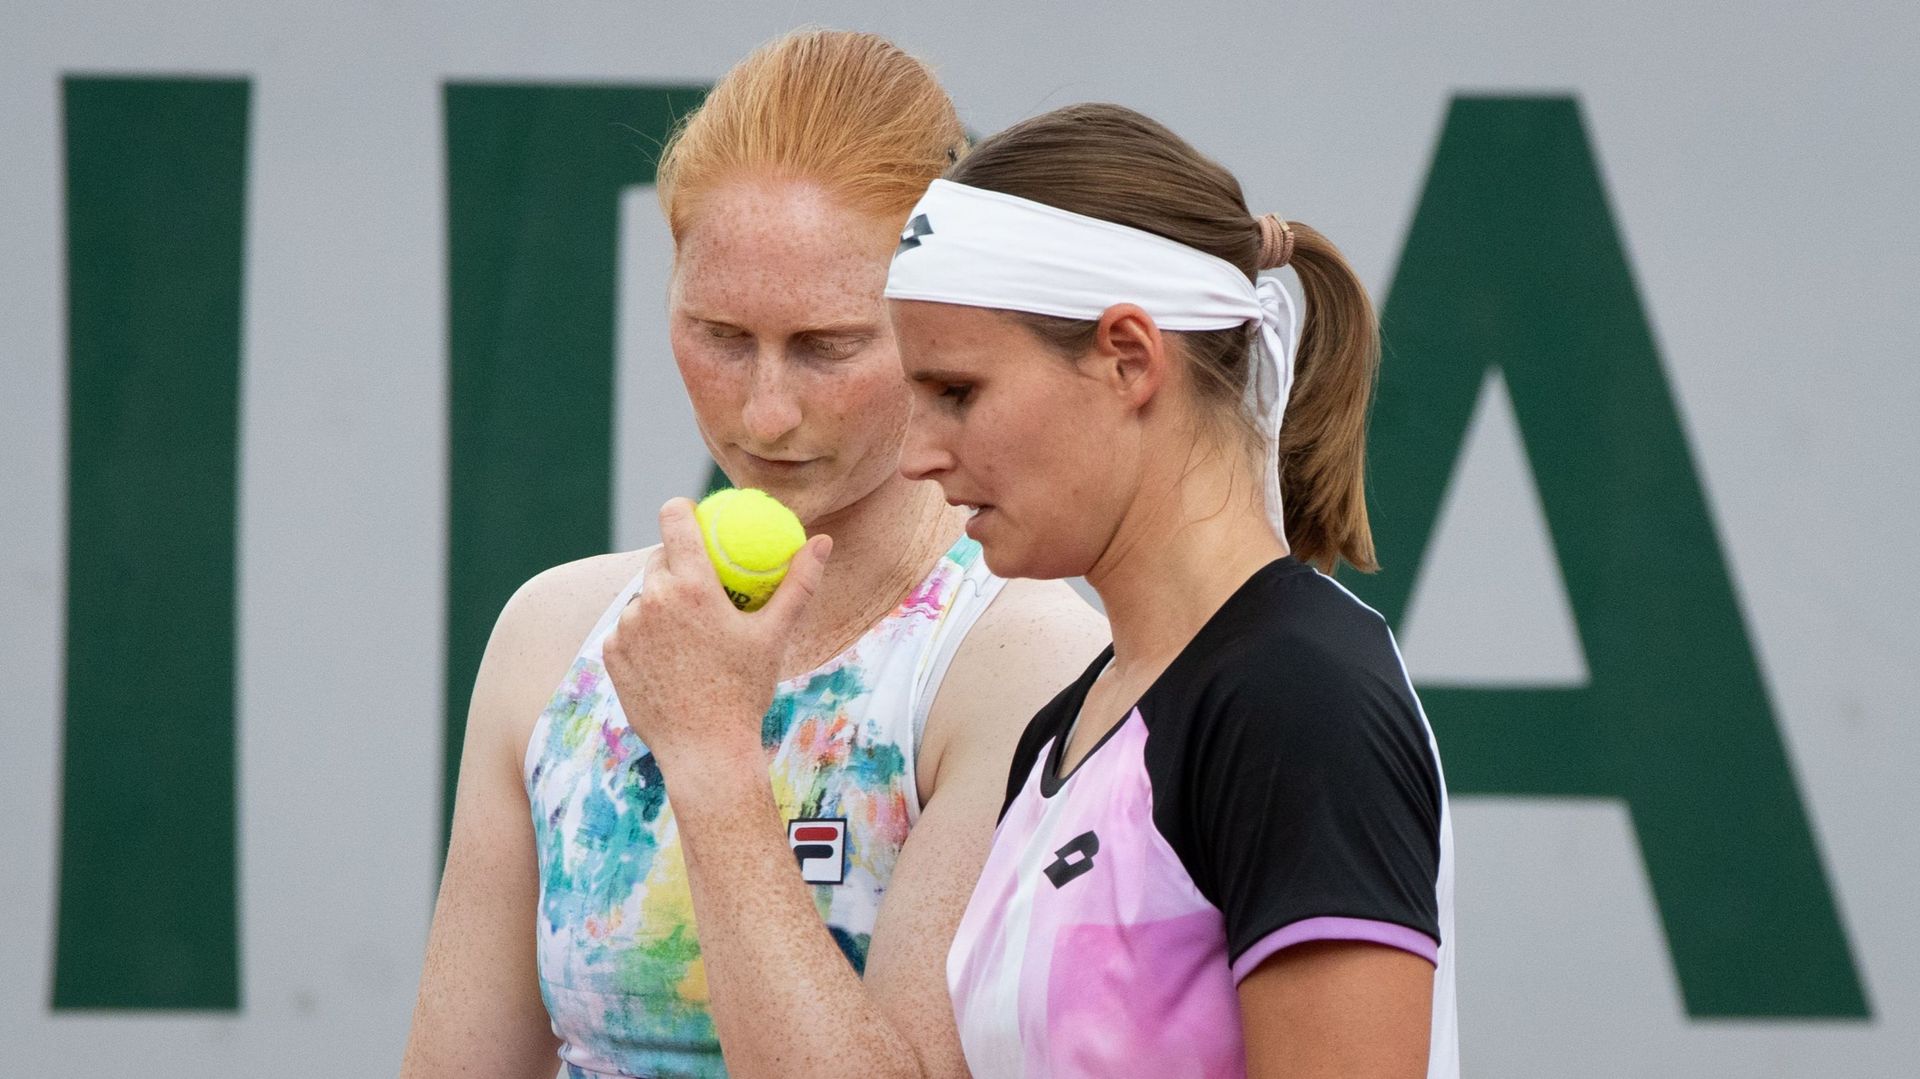 US Open - Greet Minnen et Alison Van Uytvanck en 8e de finale du double, en attendant Elise Mertens